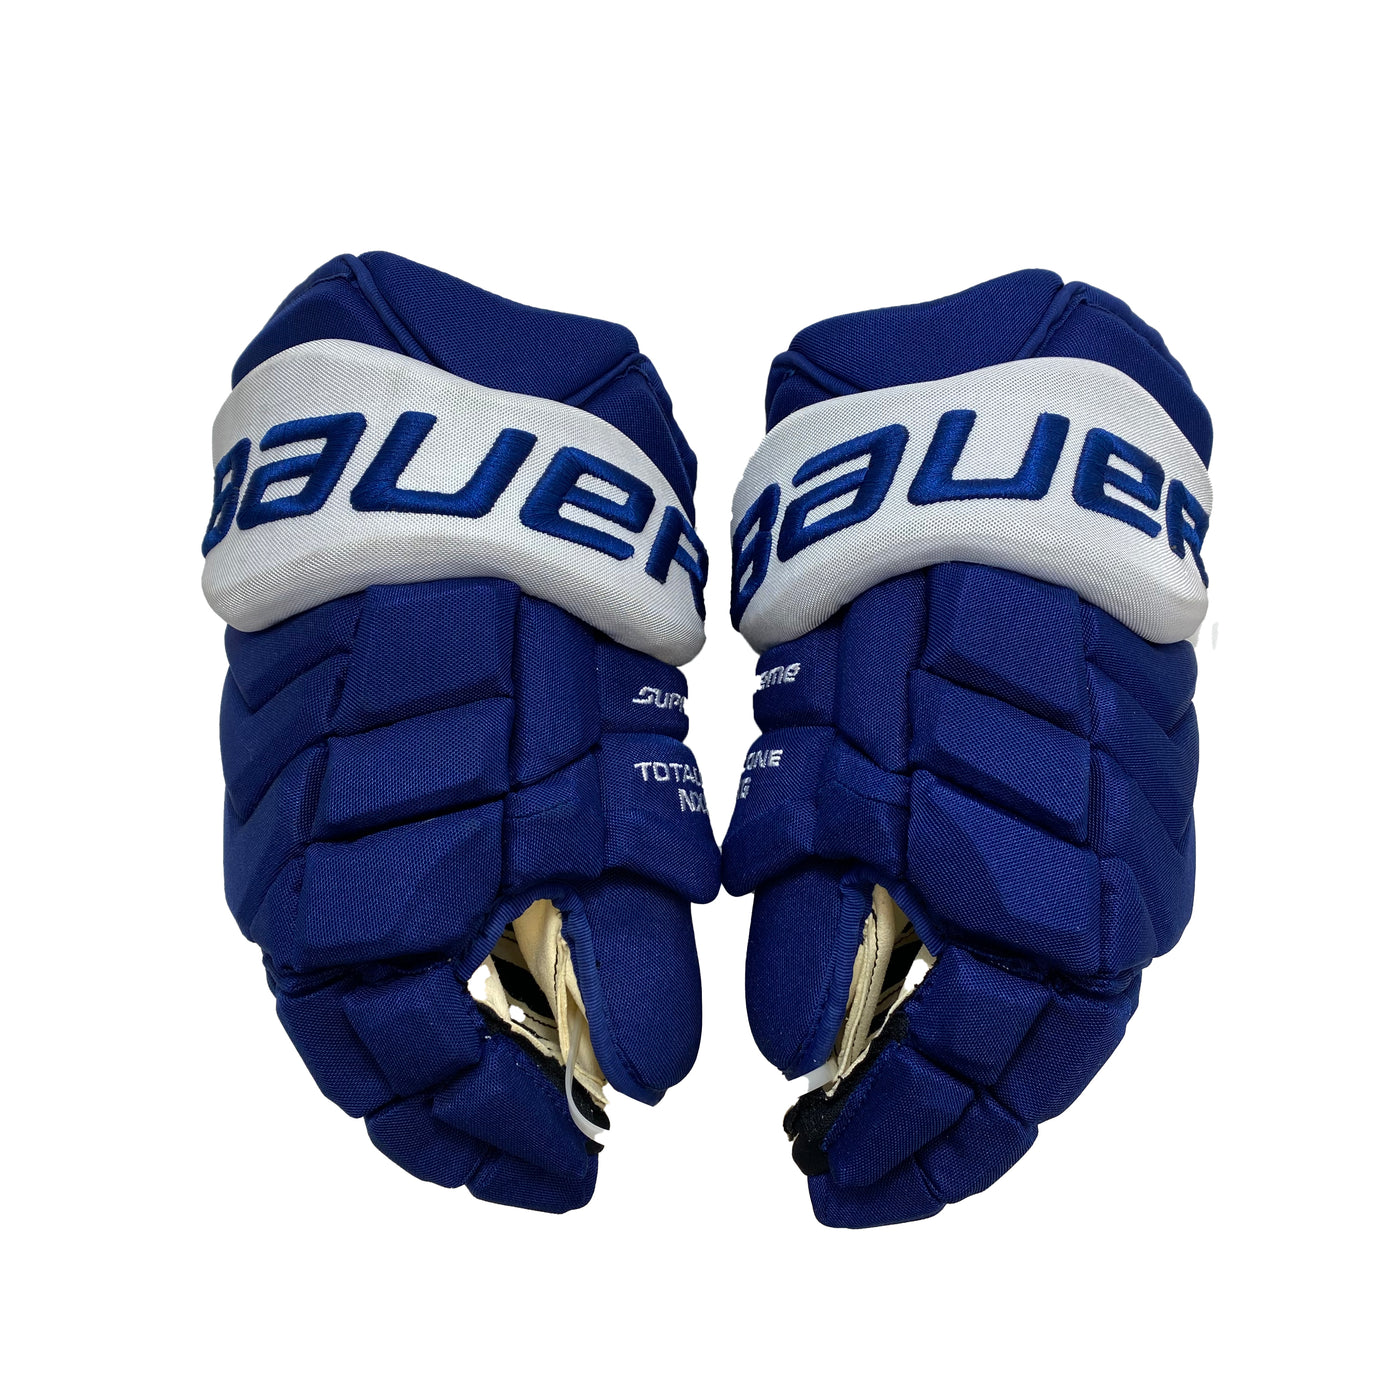 Bauer Supreme Total One NXG - Toronto Maple Leafs - Pro Stock Gloves - James Van Riemsdyk